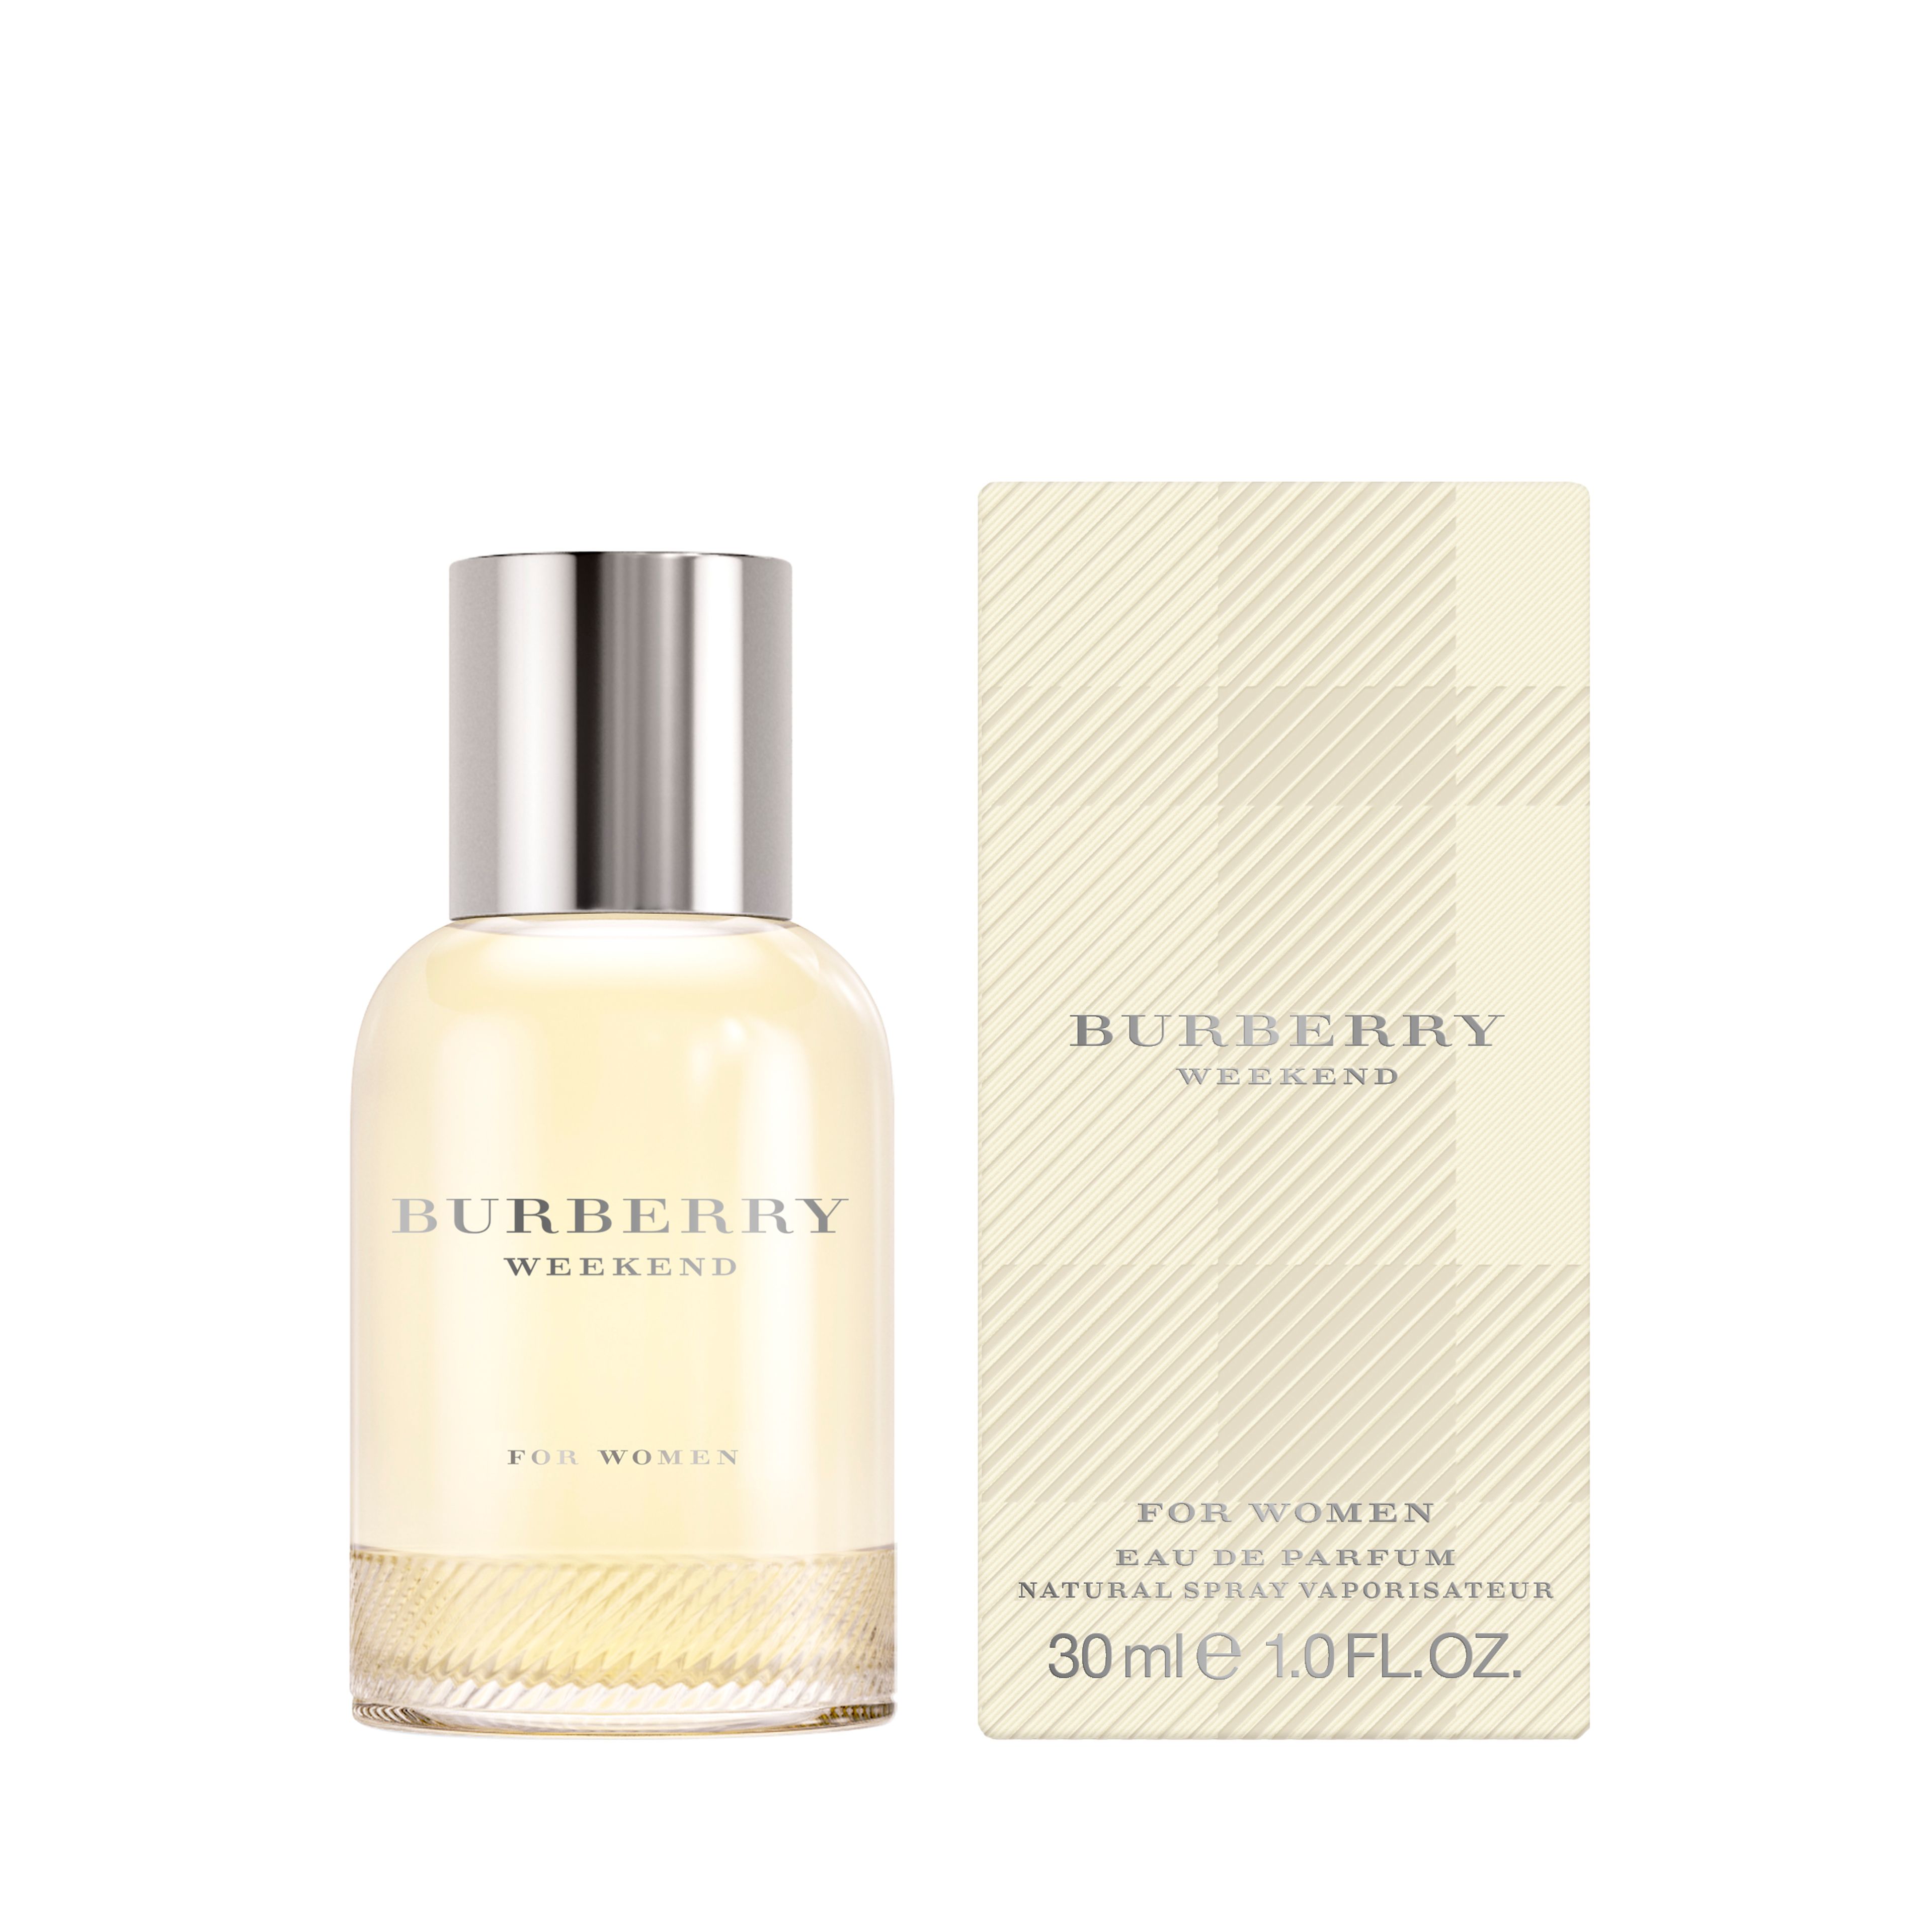 Burberry Burberry Weekend Eau De Parfum 1